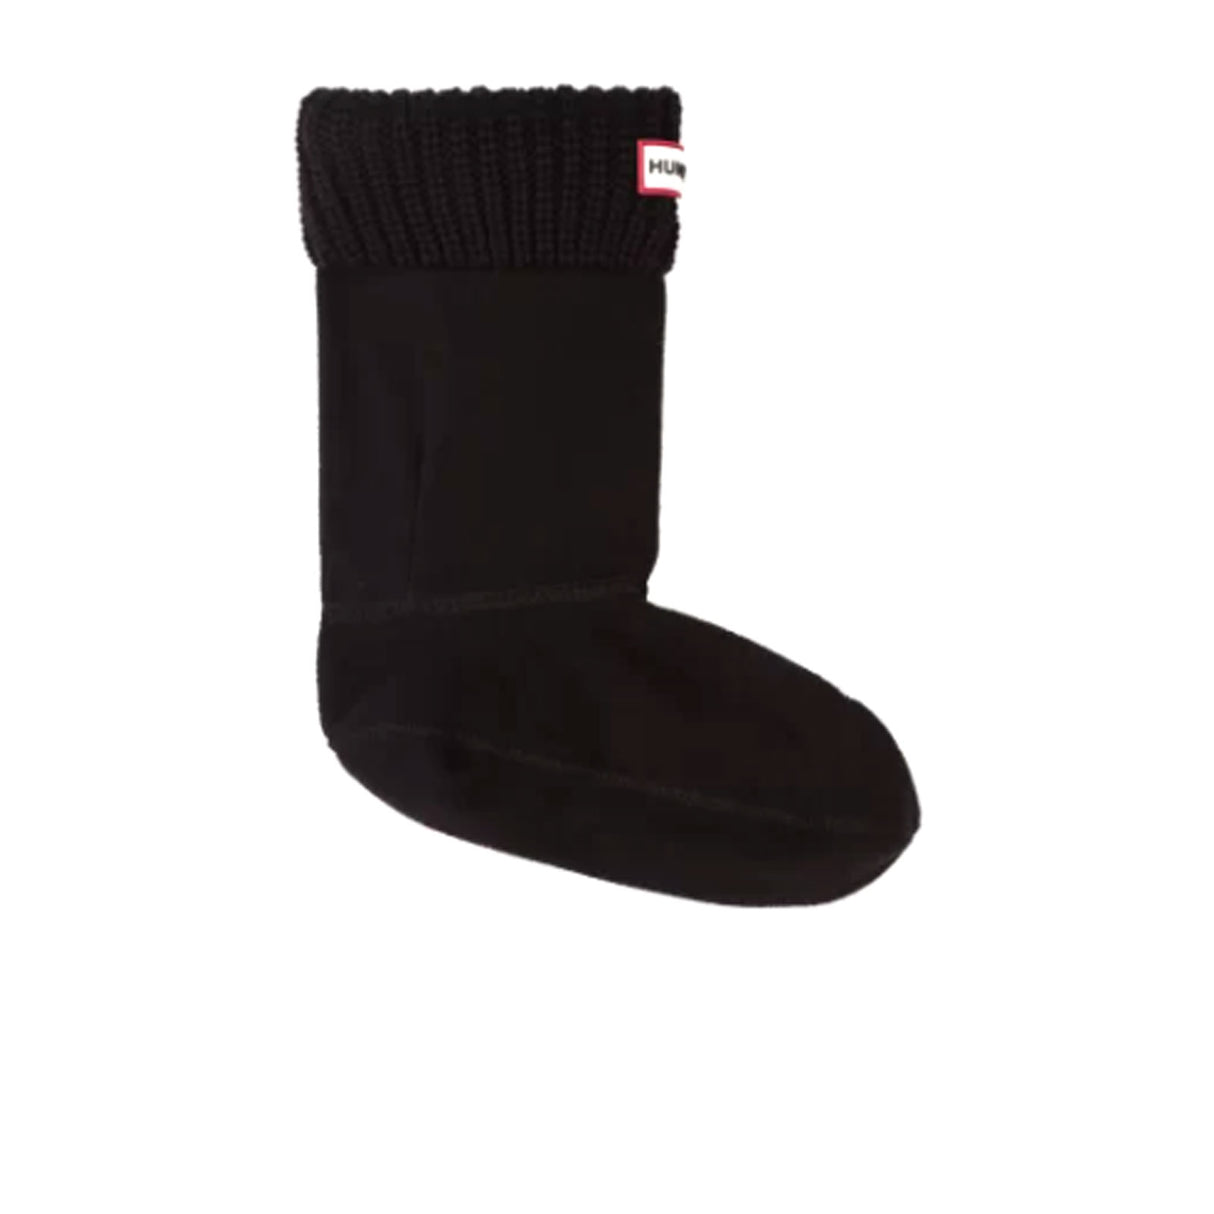 Hunter Half Cardigan Knitted Cuff Boot Socks (Women) - Black Accessories - Socks - Lifestyle - The Heel Shoe Fitters